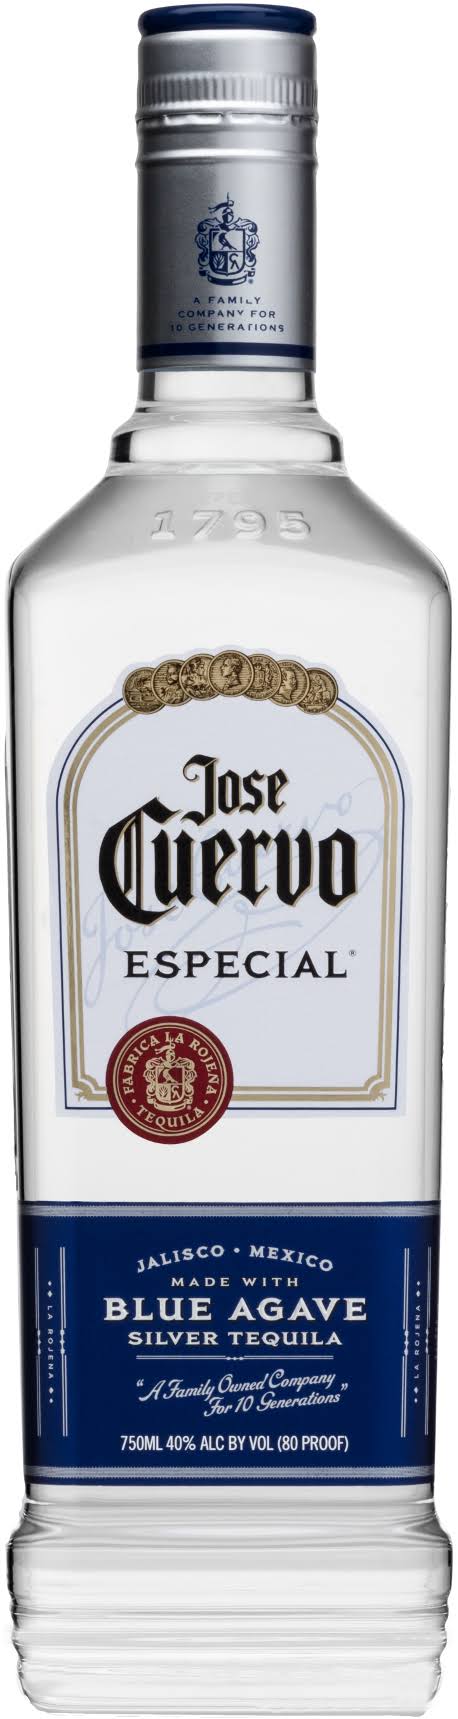 Jose Cuervo Especial Silver Tequila - 750ml